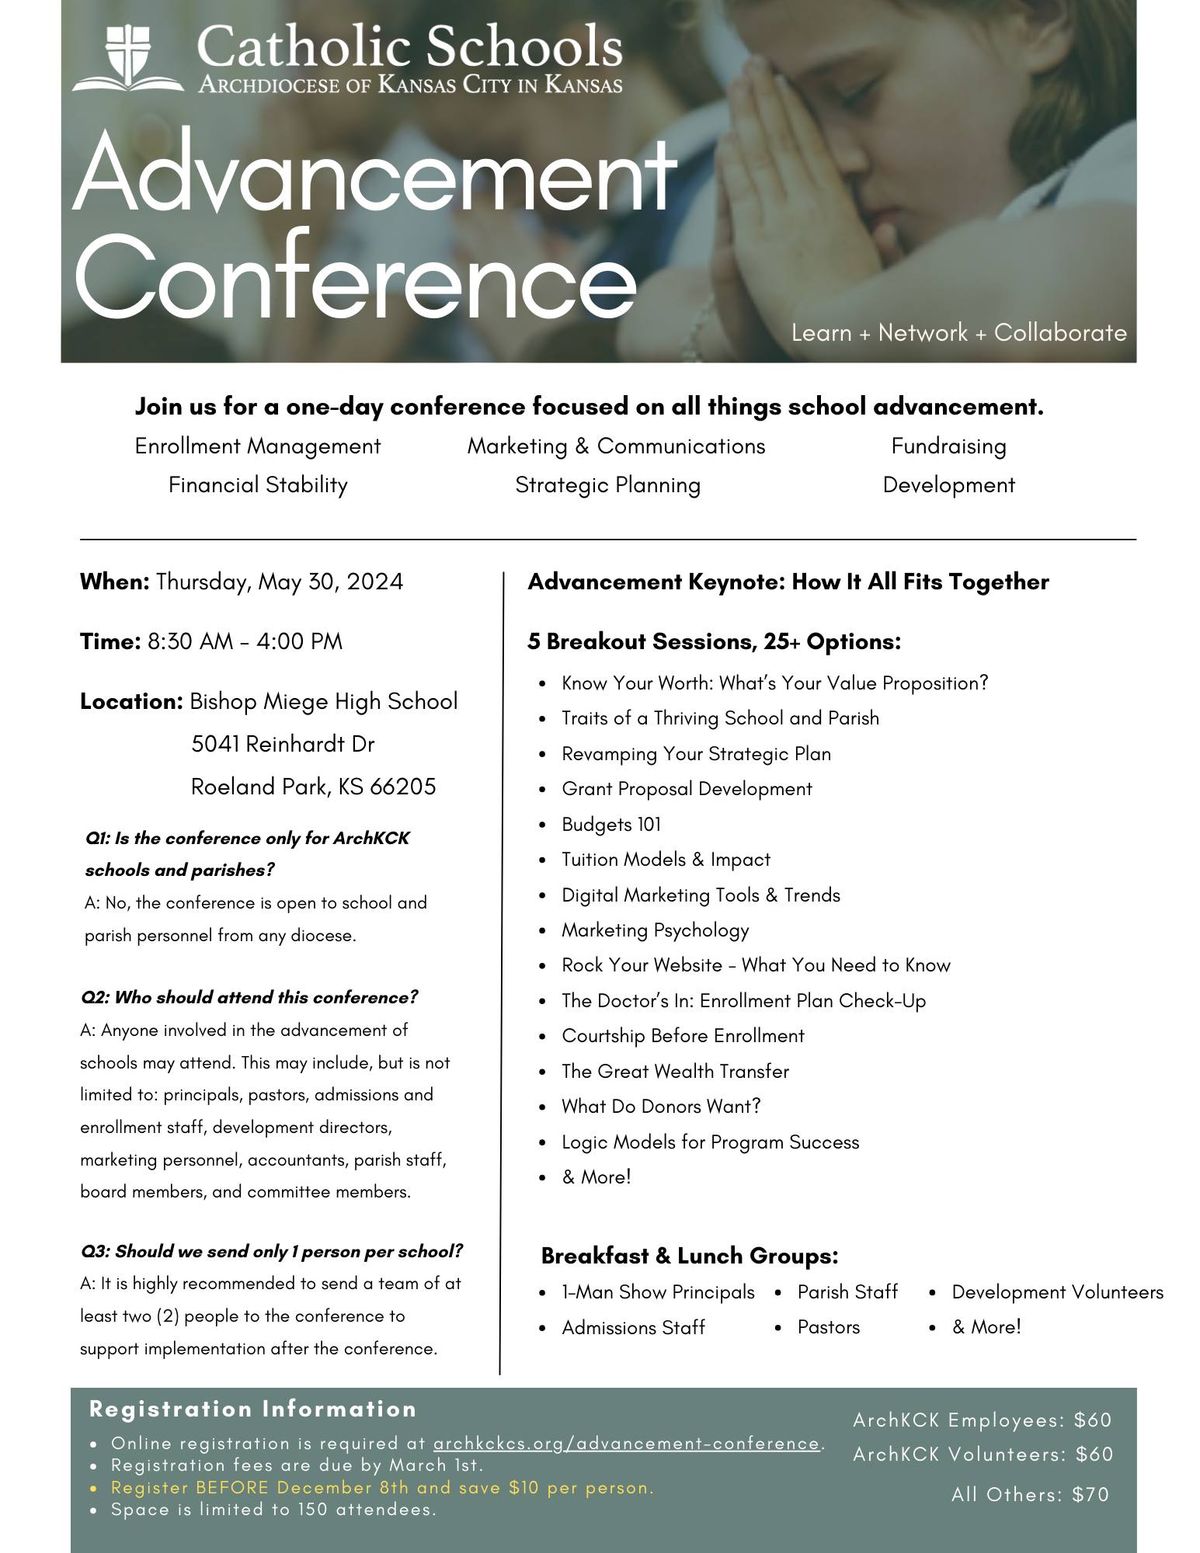 Catholic School Advancement Conference